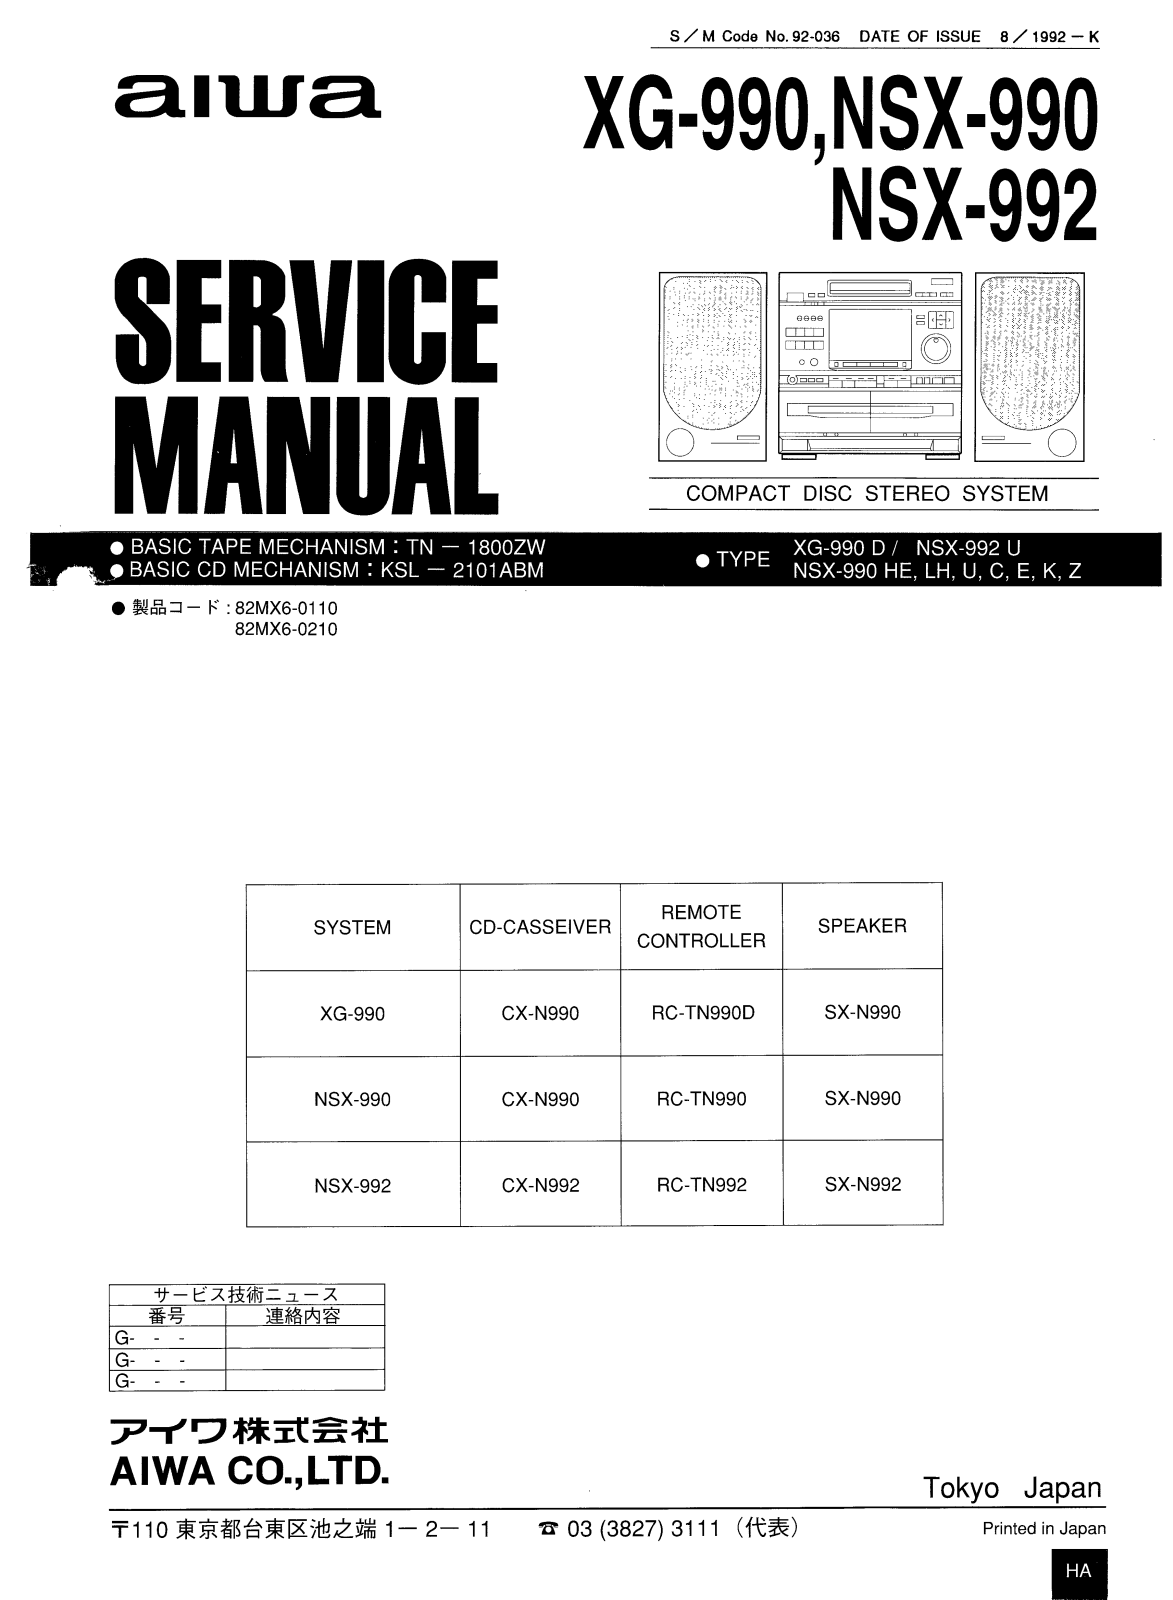 Aiwa XG-990, NSX-992, NSX-990 Service manual